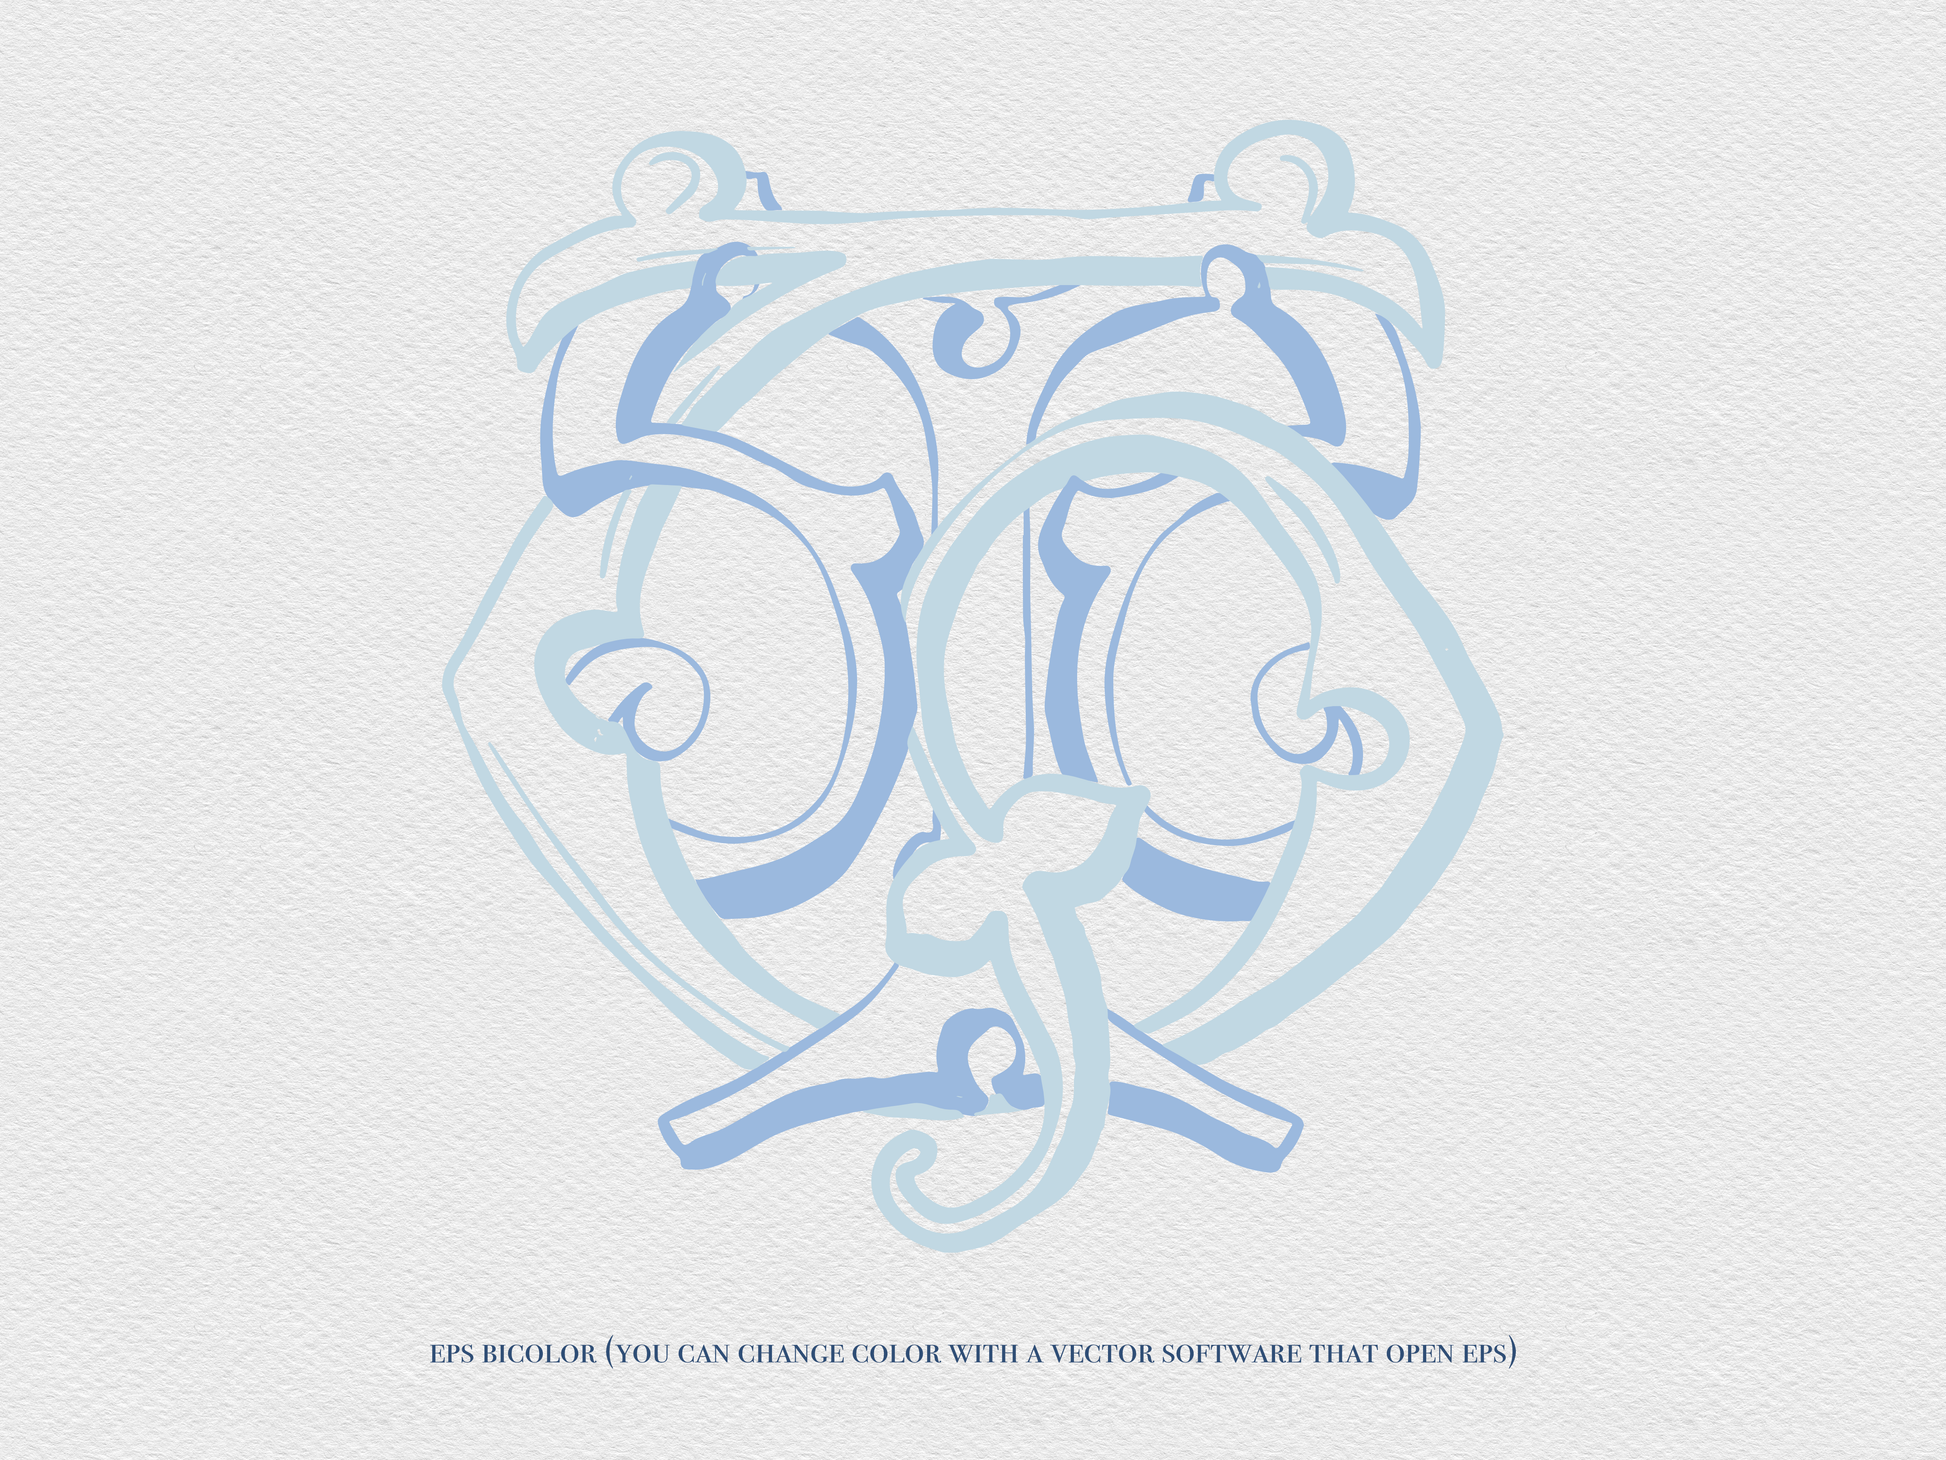 2 Letter Monogram with Letters TT | Digital Download - Wedding Monogram SVG, Personal Logo, Wedding Logo for Wedding Invitations The Wedding Crest Lab